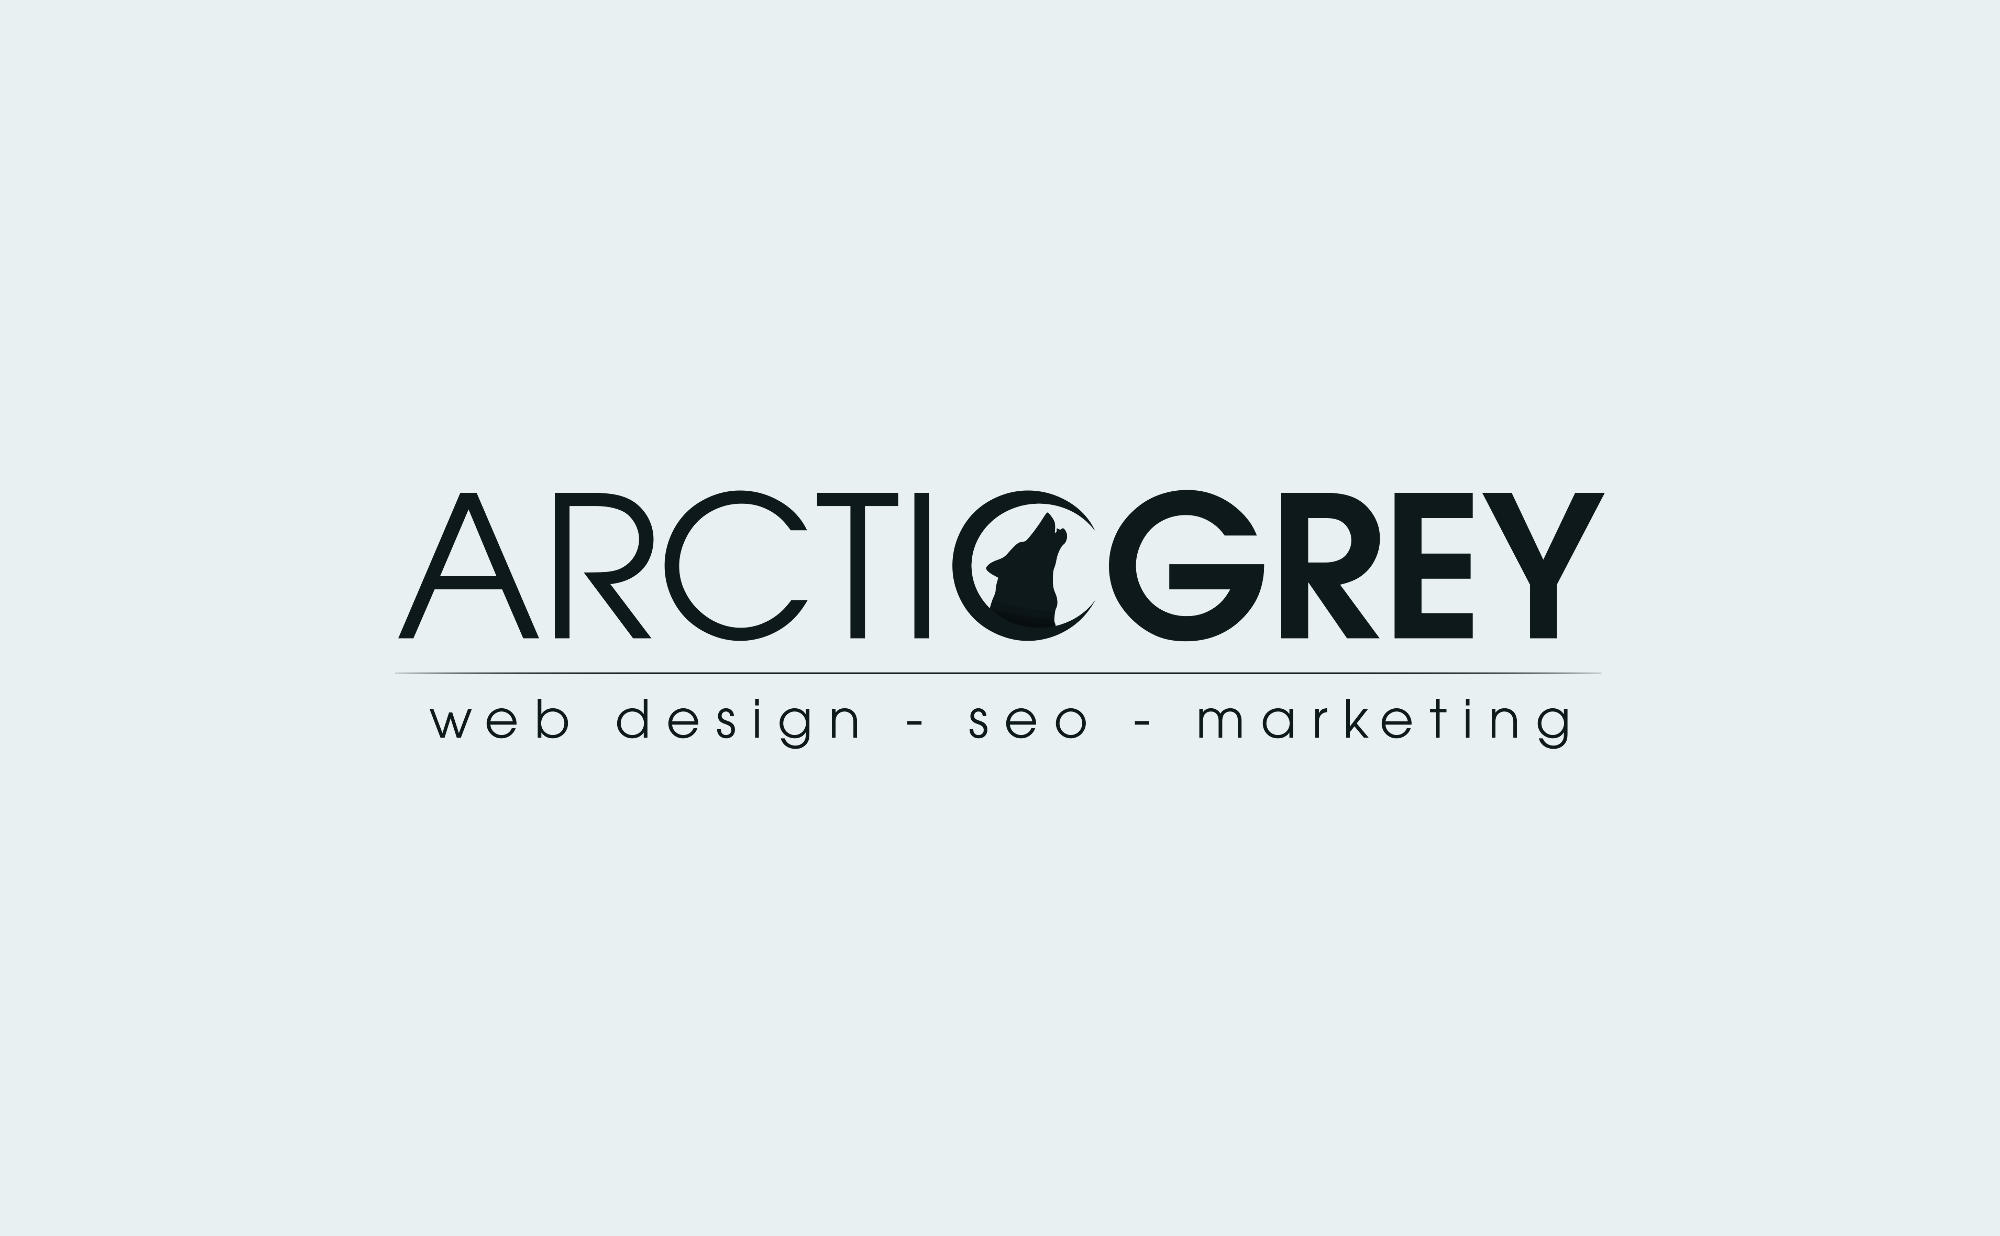 Best SEO Website Development Firm Logo: Arctic Grey Inc